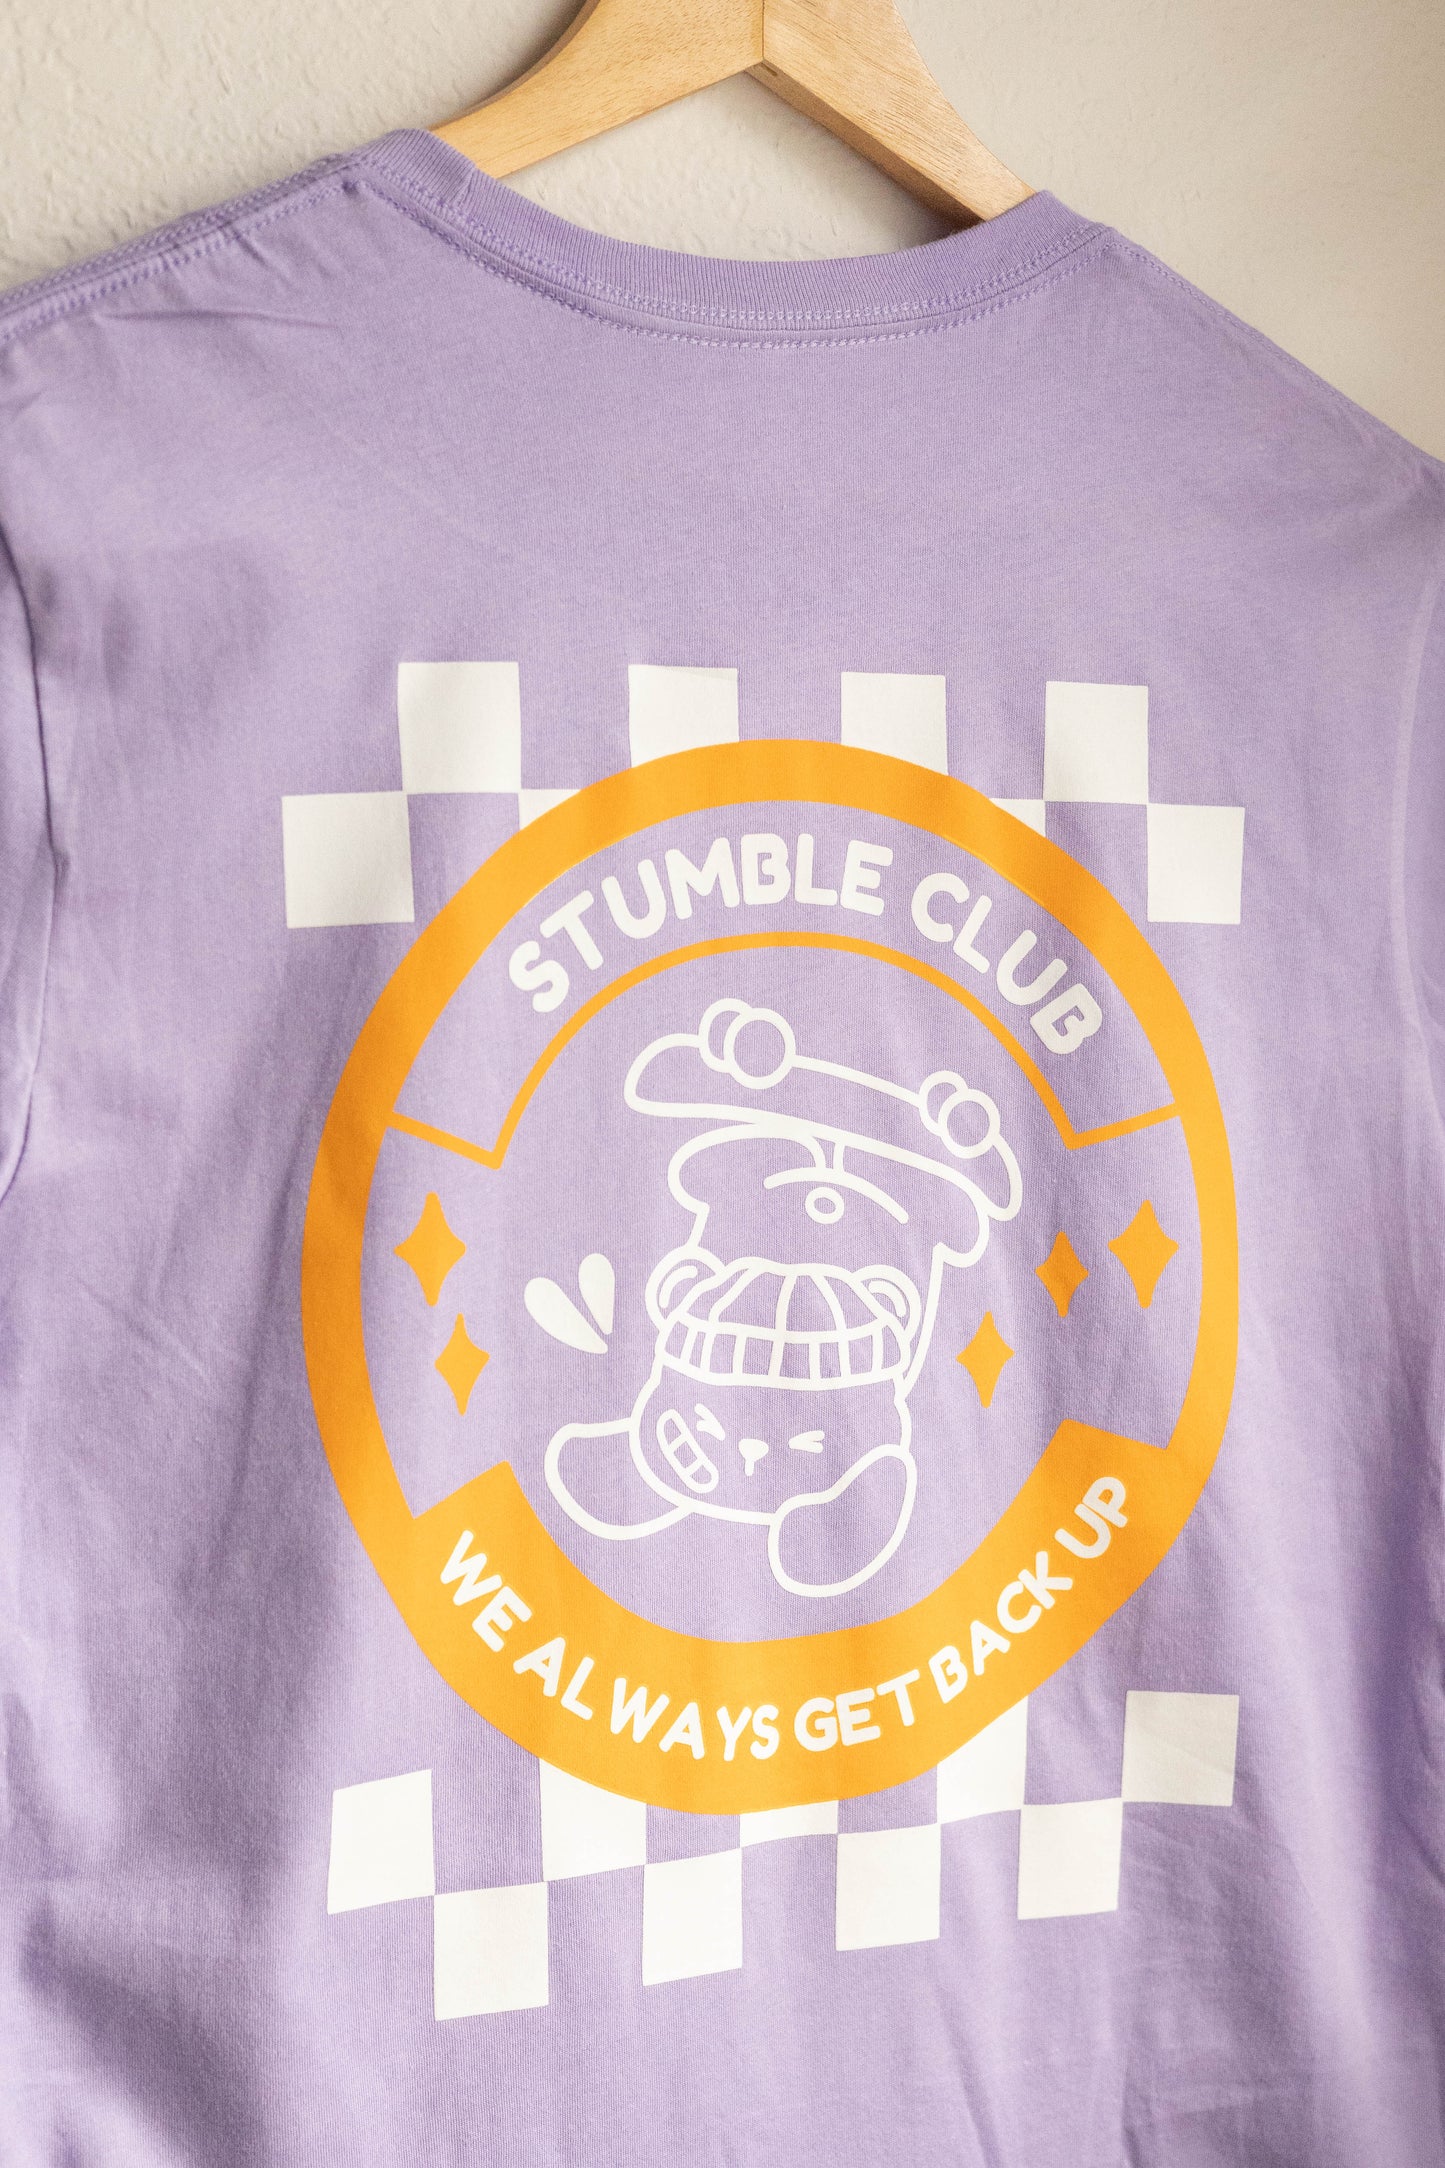 Stumble Club Shirt [B-Grade]